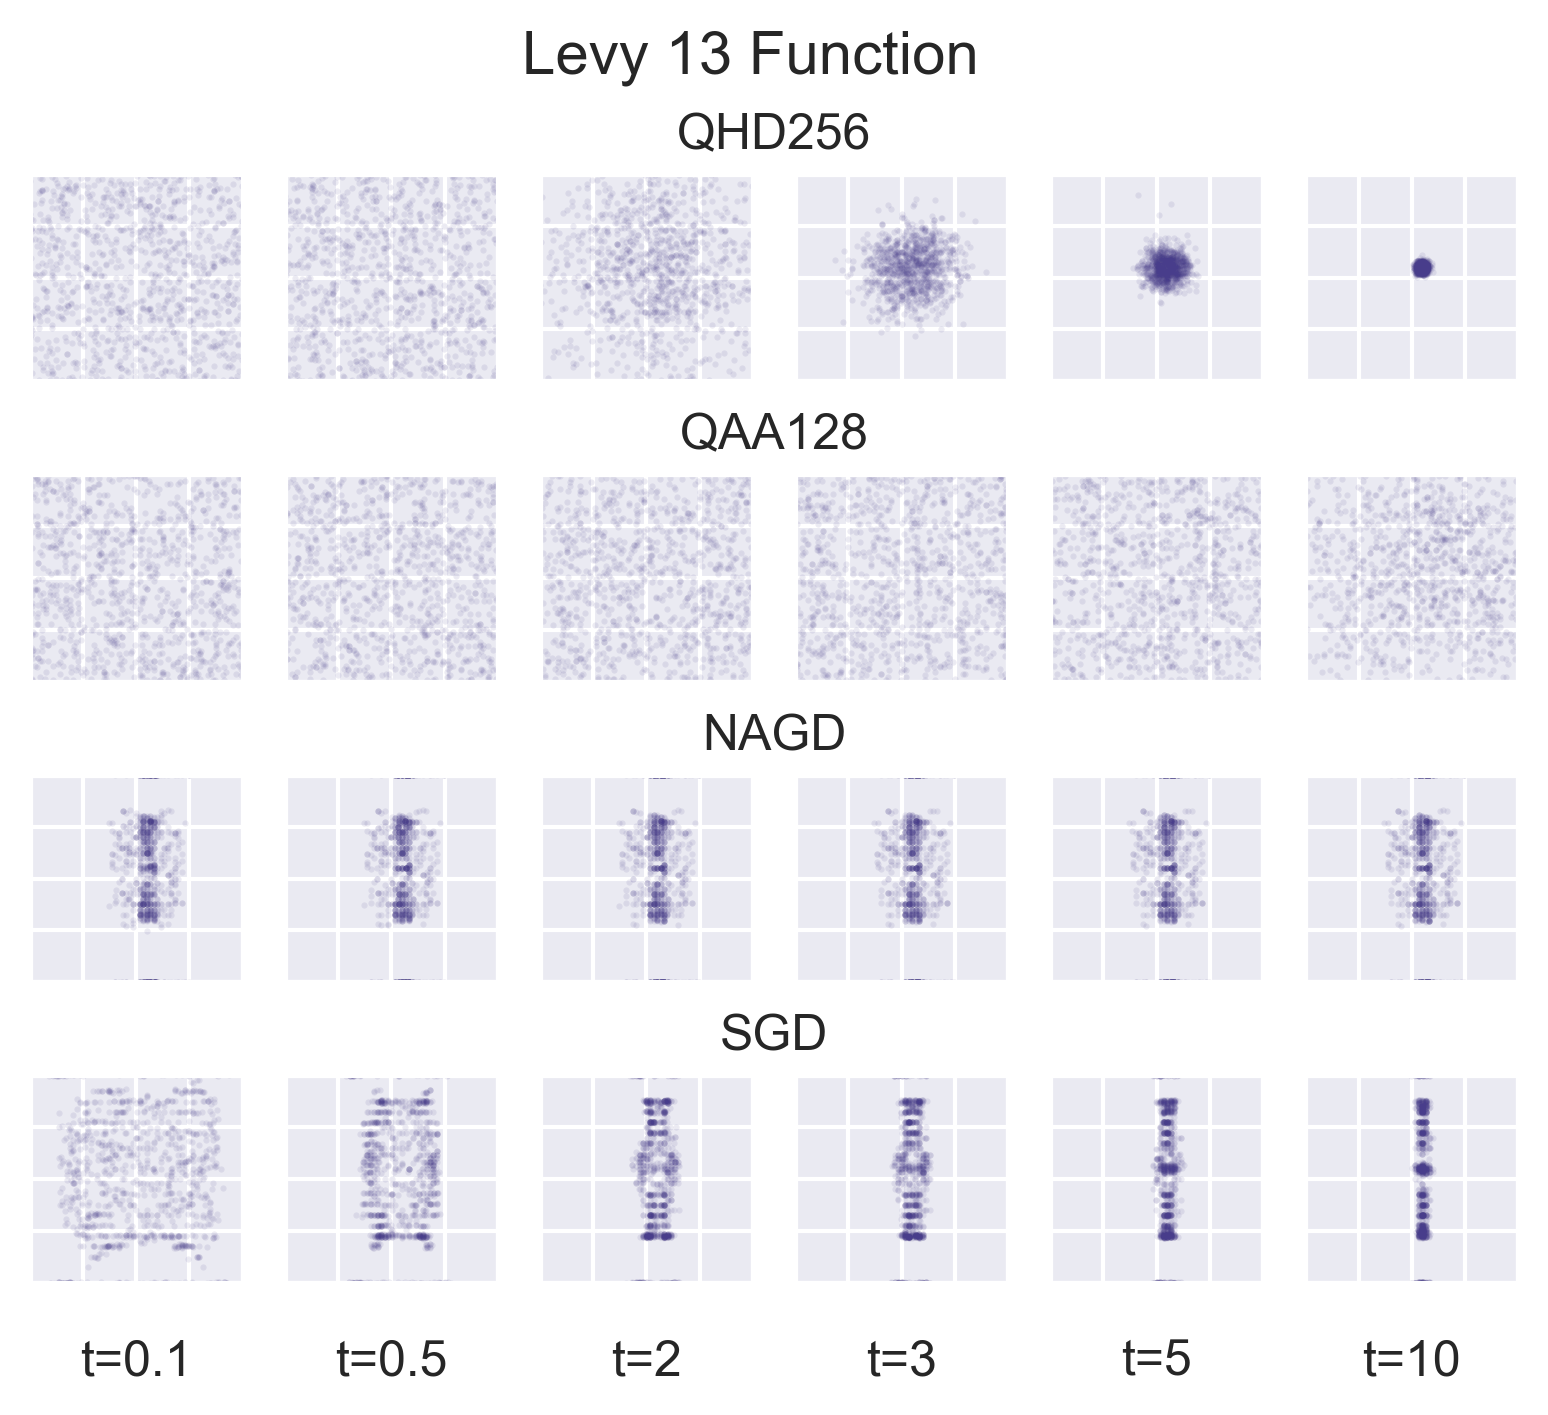 Comparison of optimization methods on levy13